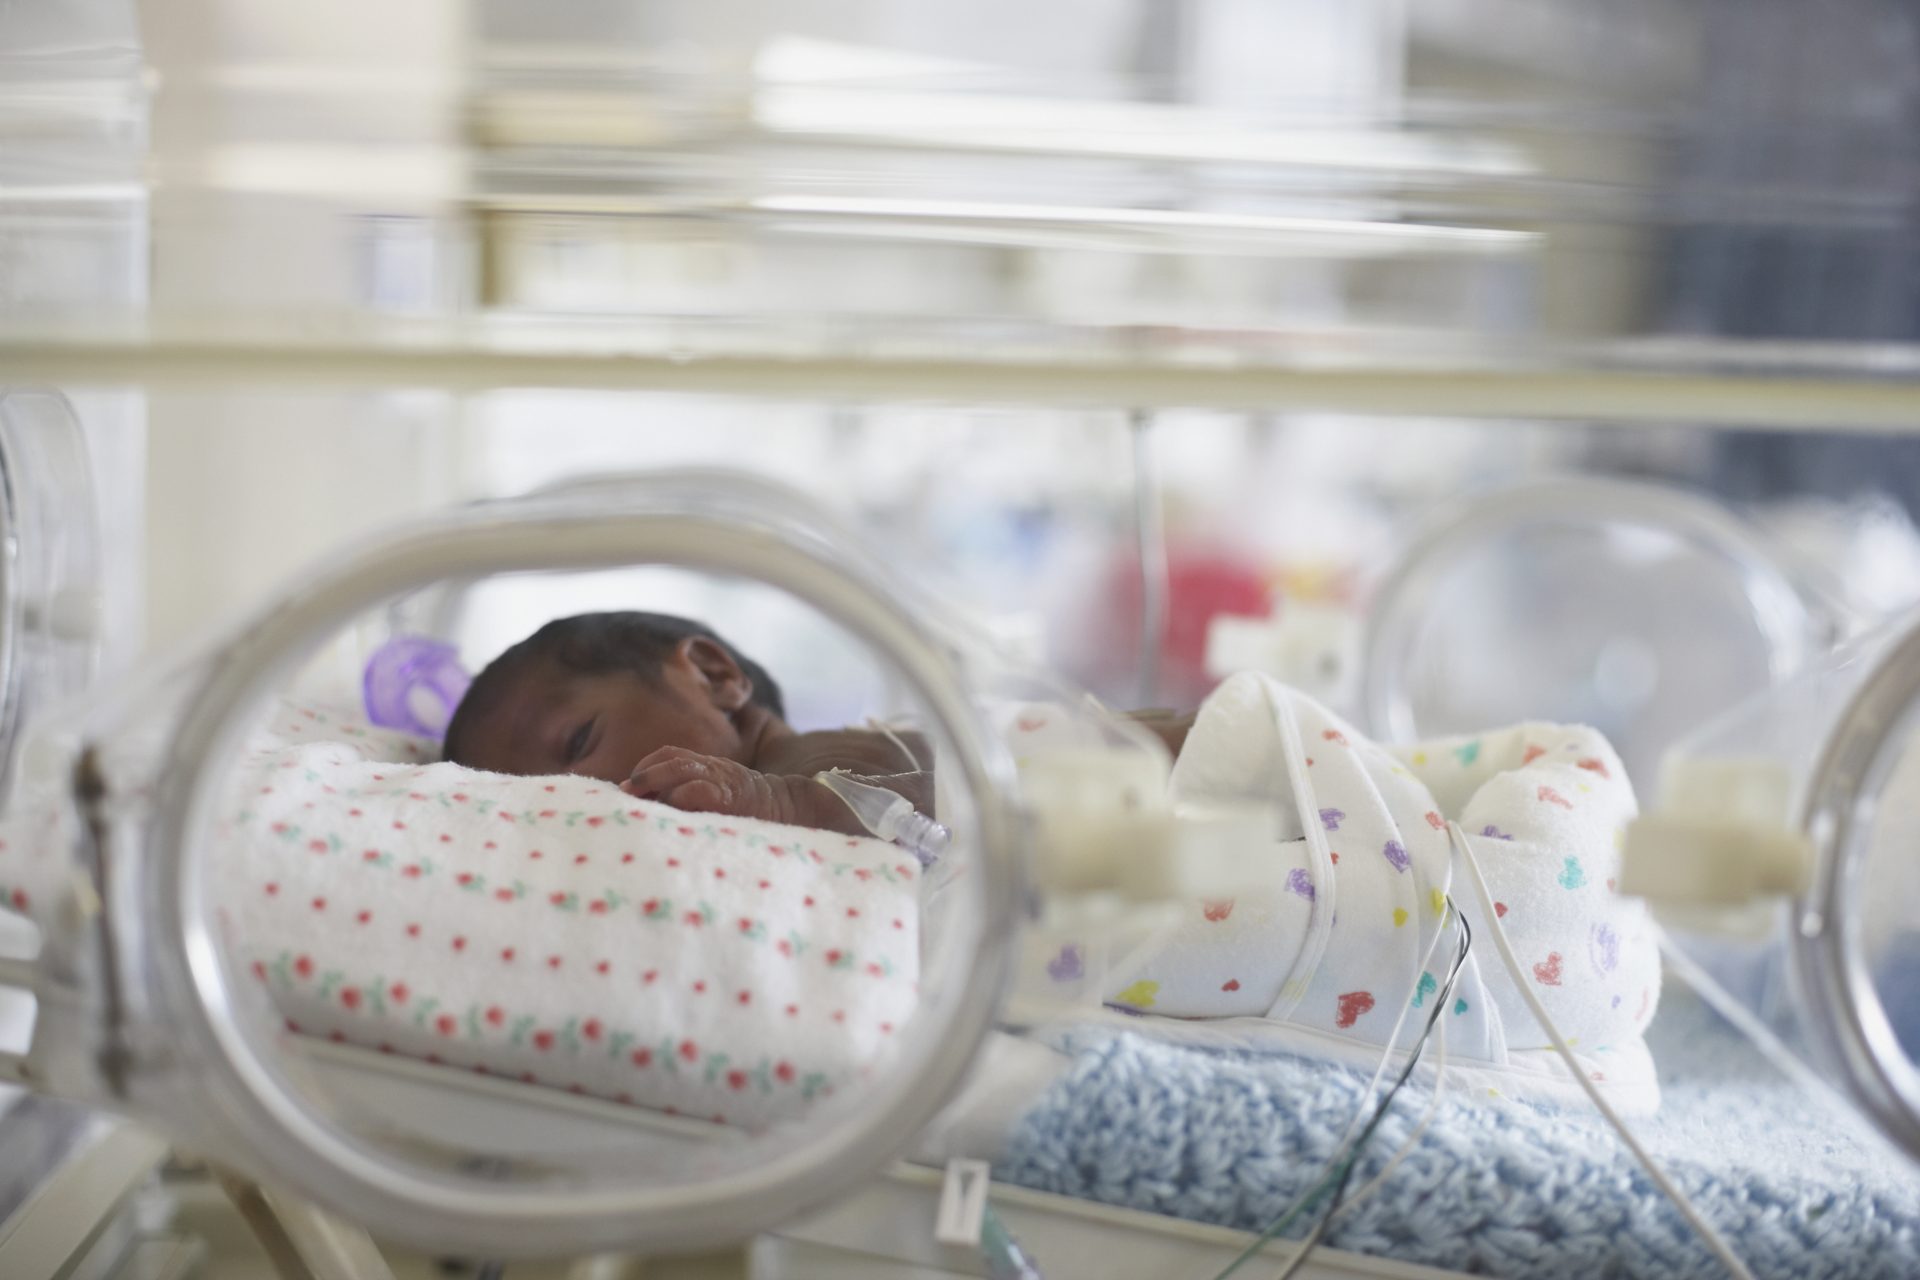 Blacks and Hispanics receive lower neonatal care 